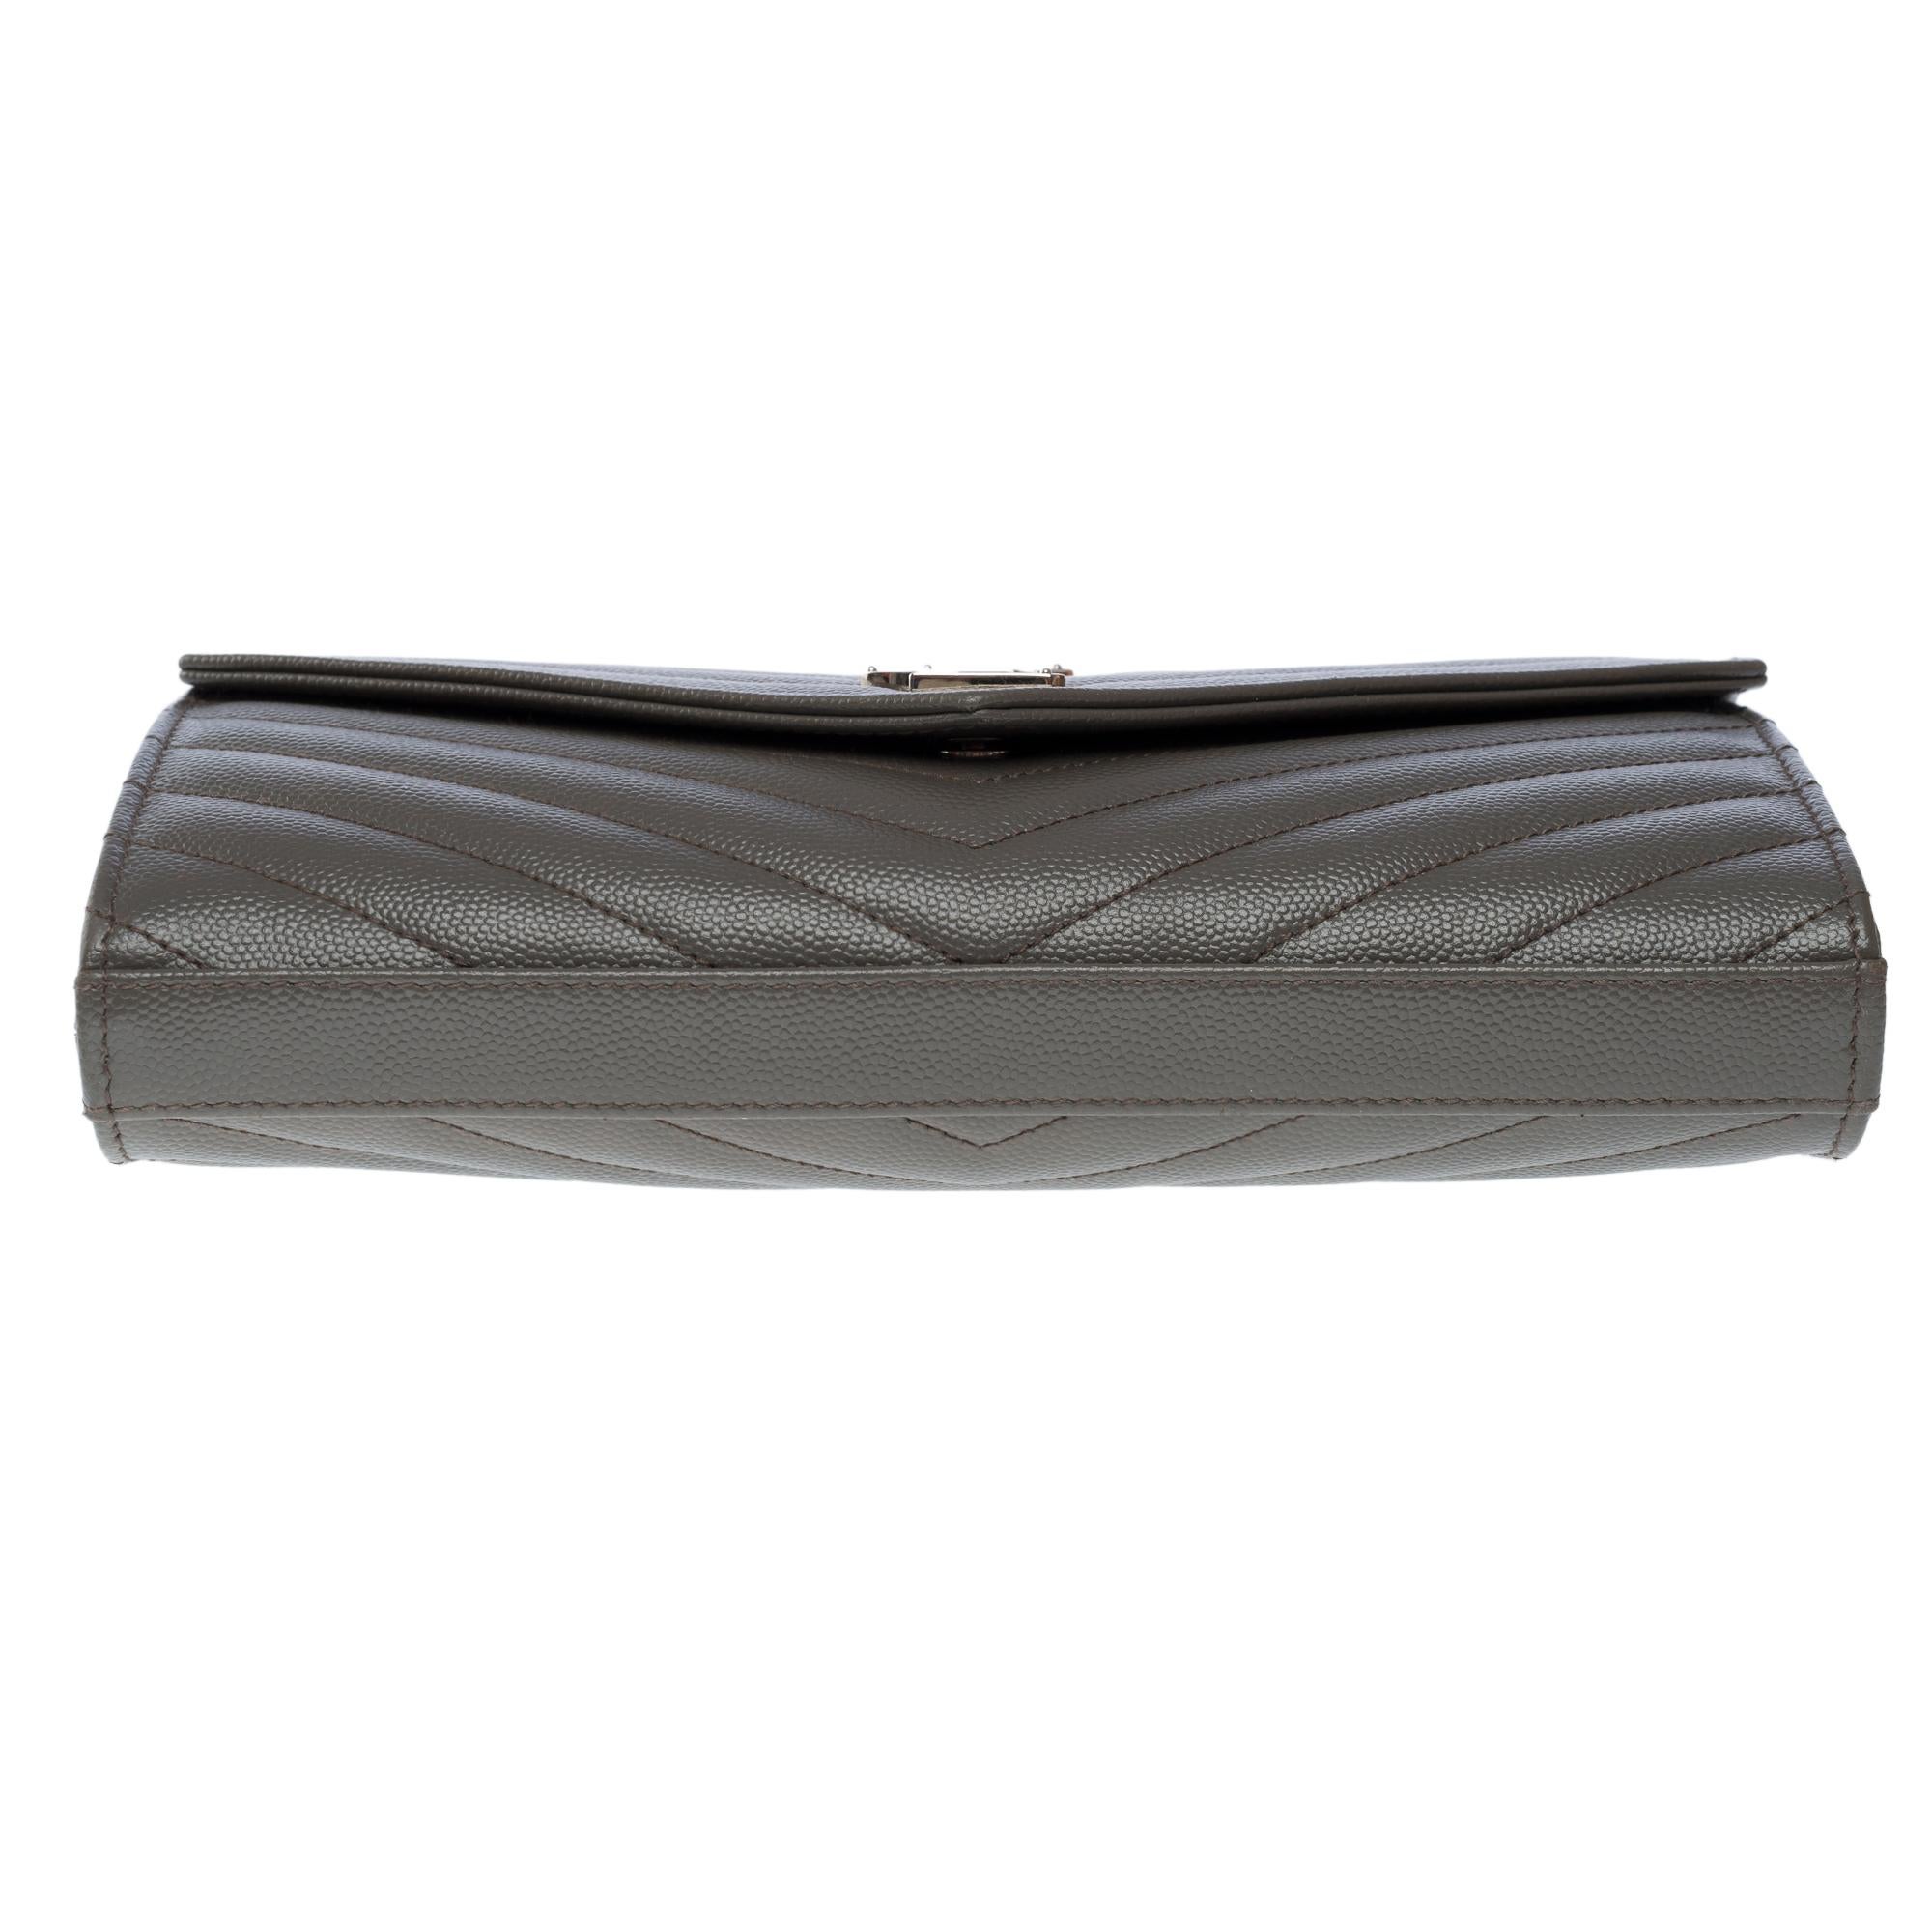 New YSL Pochette Cassandre classic shoulder bag in Grey leather, SHW For Sale 6